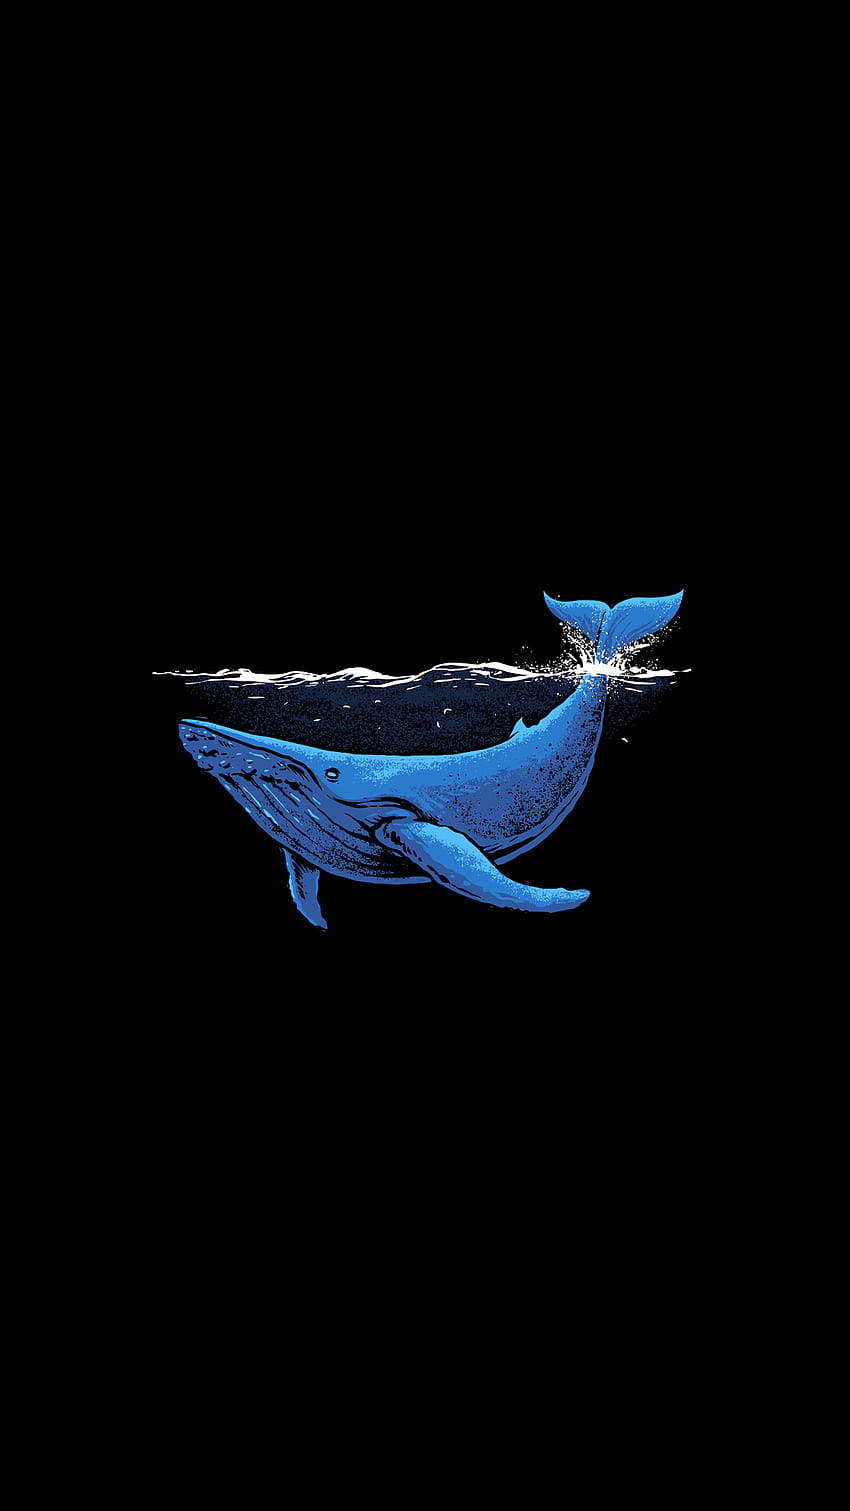 Whale Minimalist Mobile, telefono balena minimalista Sfondo del telefono HD